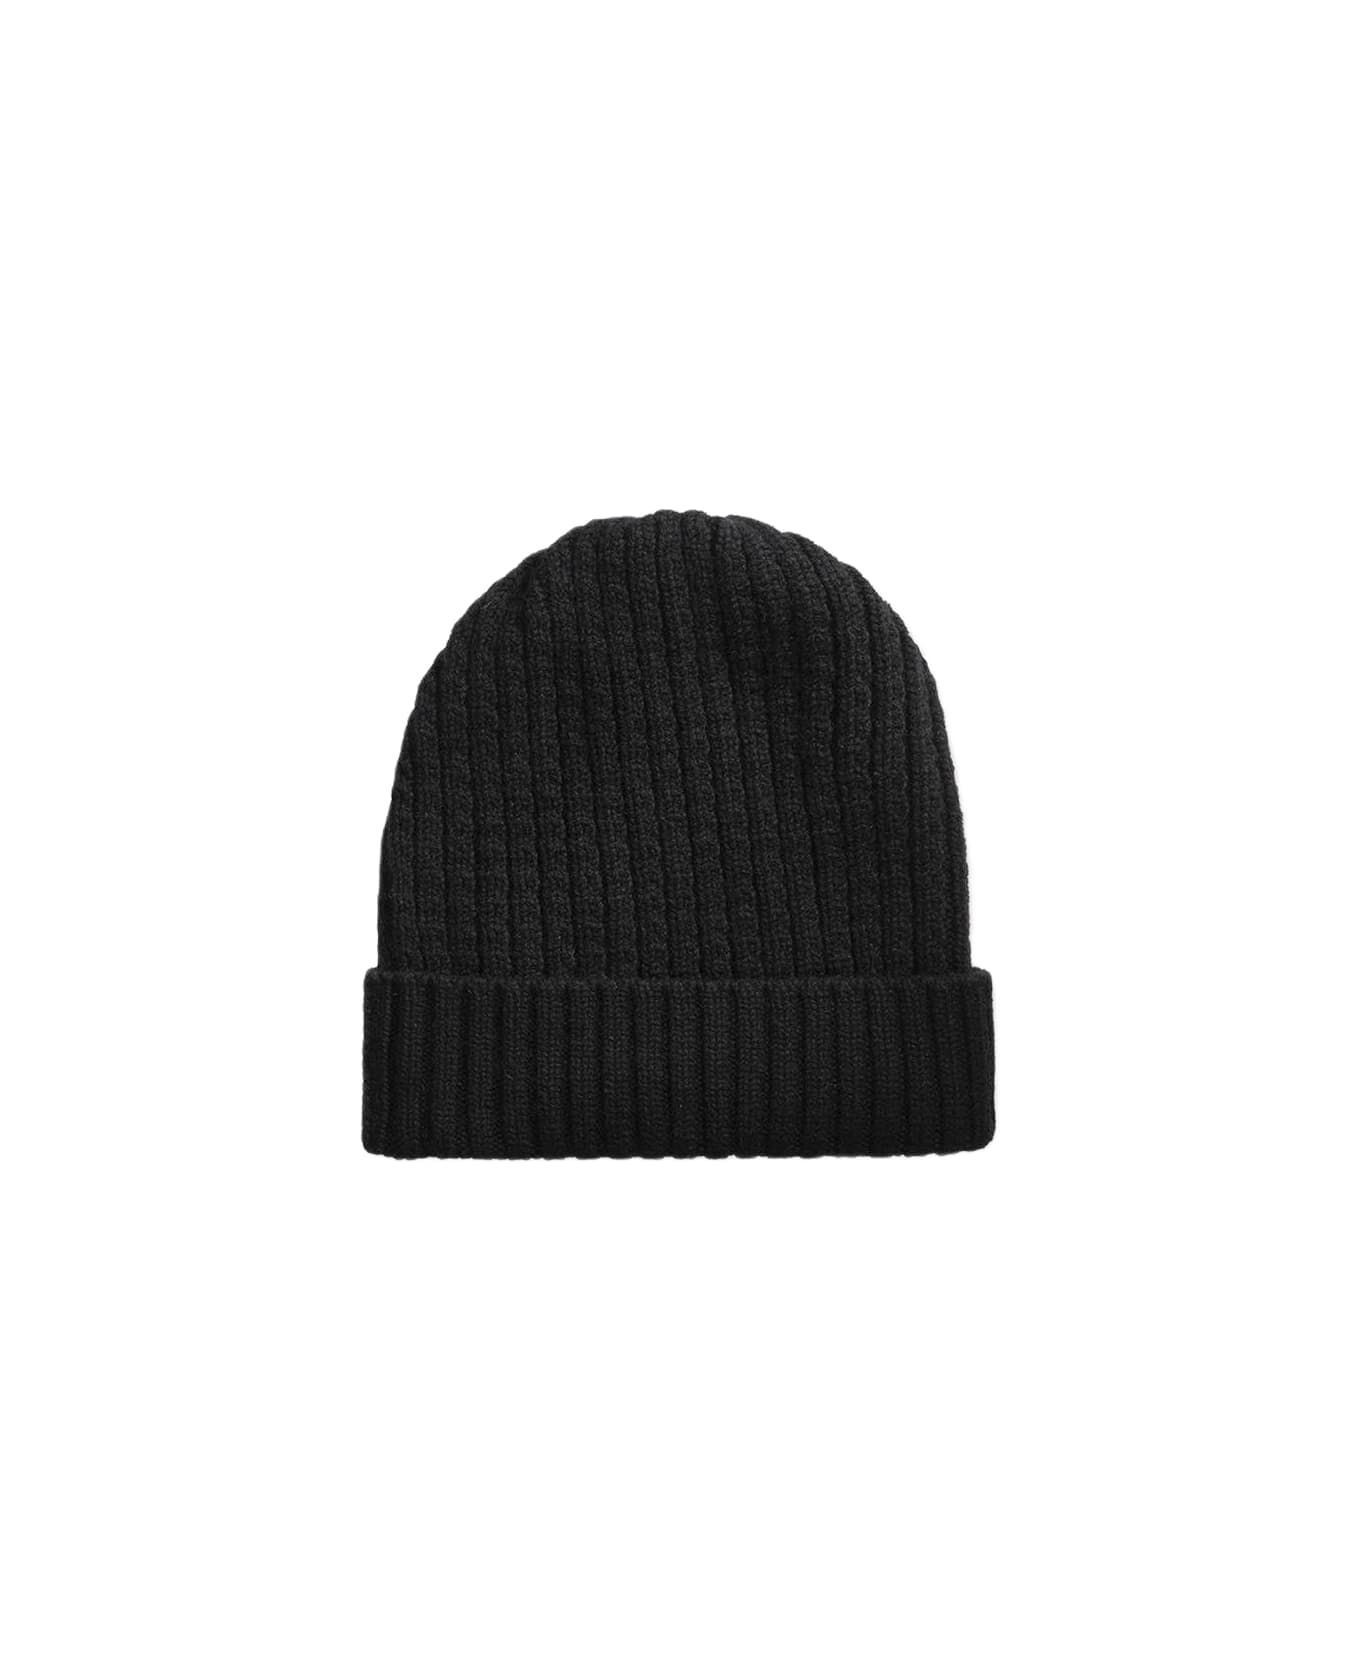 Larusmiani Cap Hat - Black